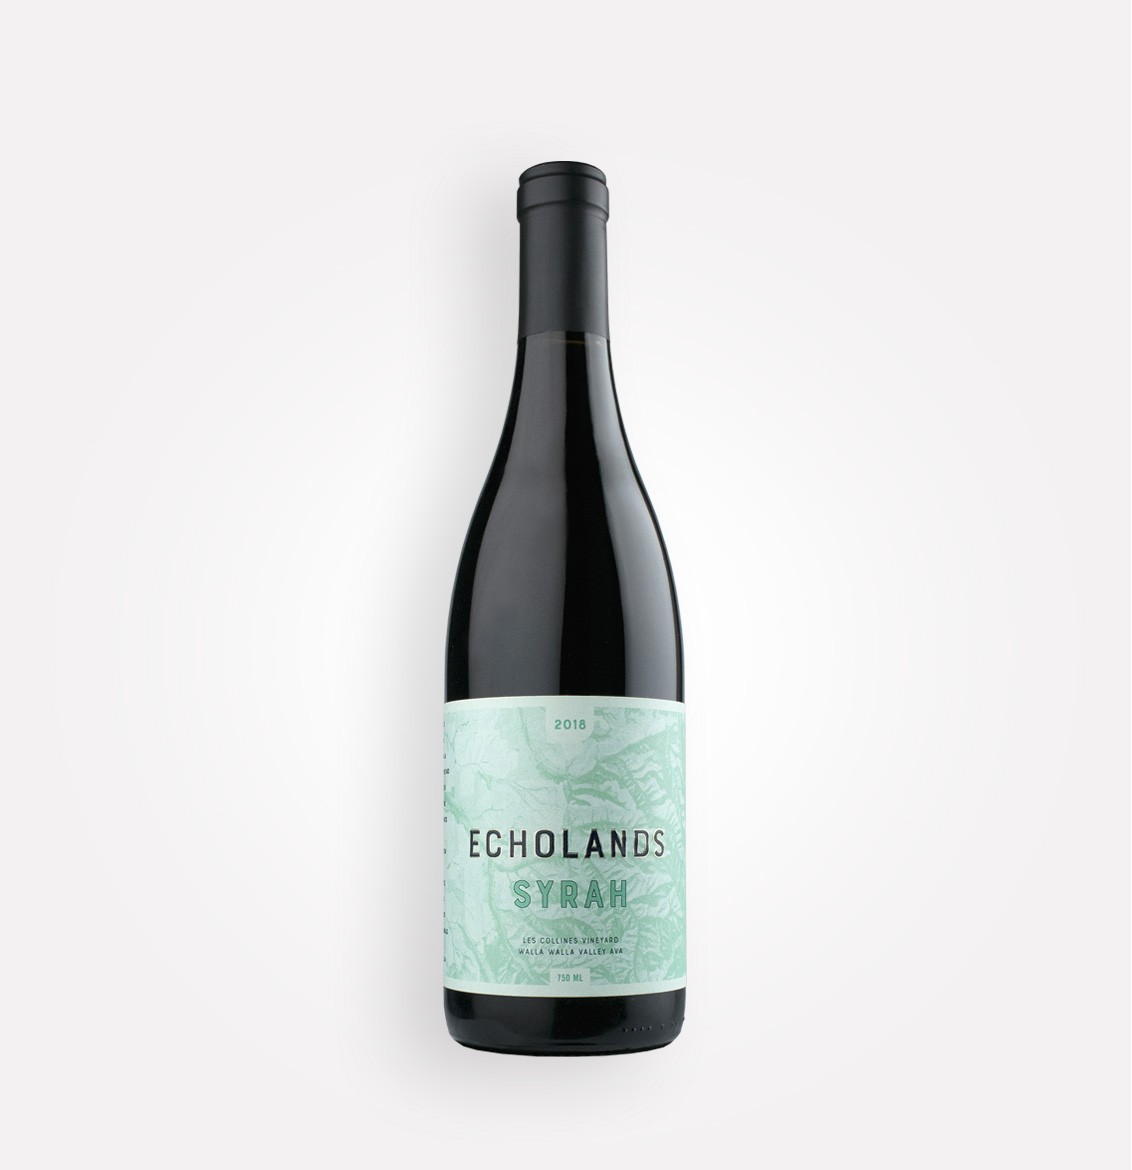 Bottle of Echolands 2018 Les Collines Vineyard Syrah wine from Washington's Walla Walla Valley